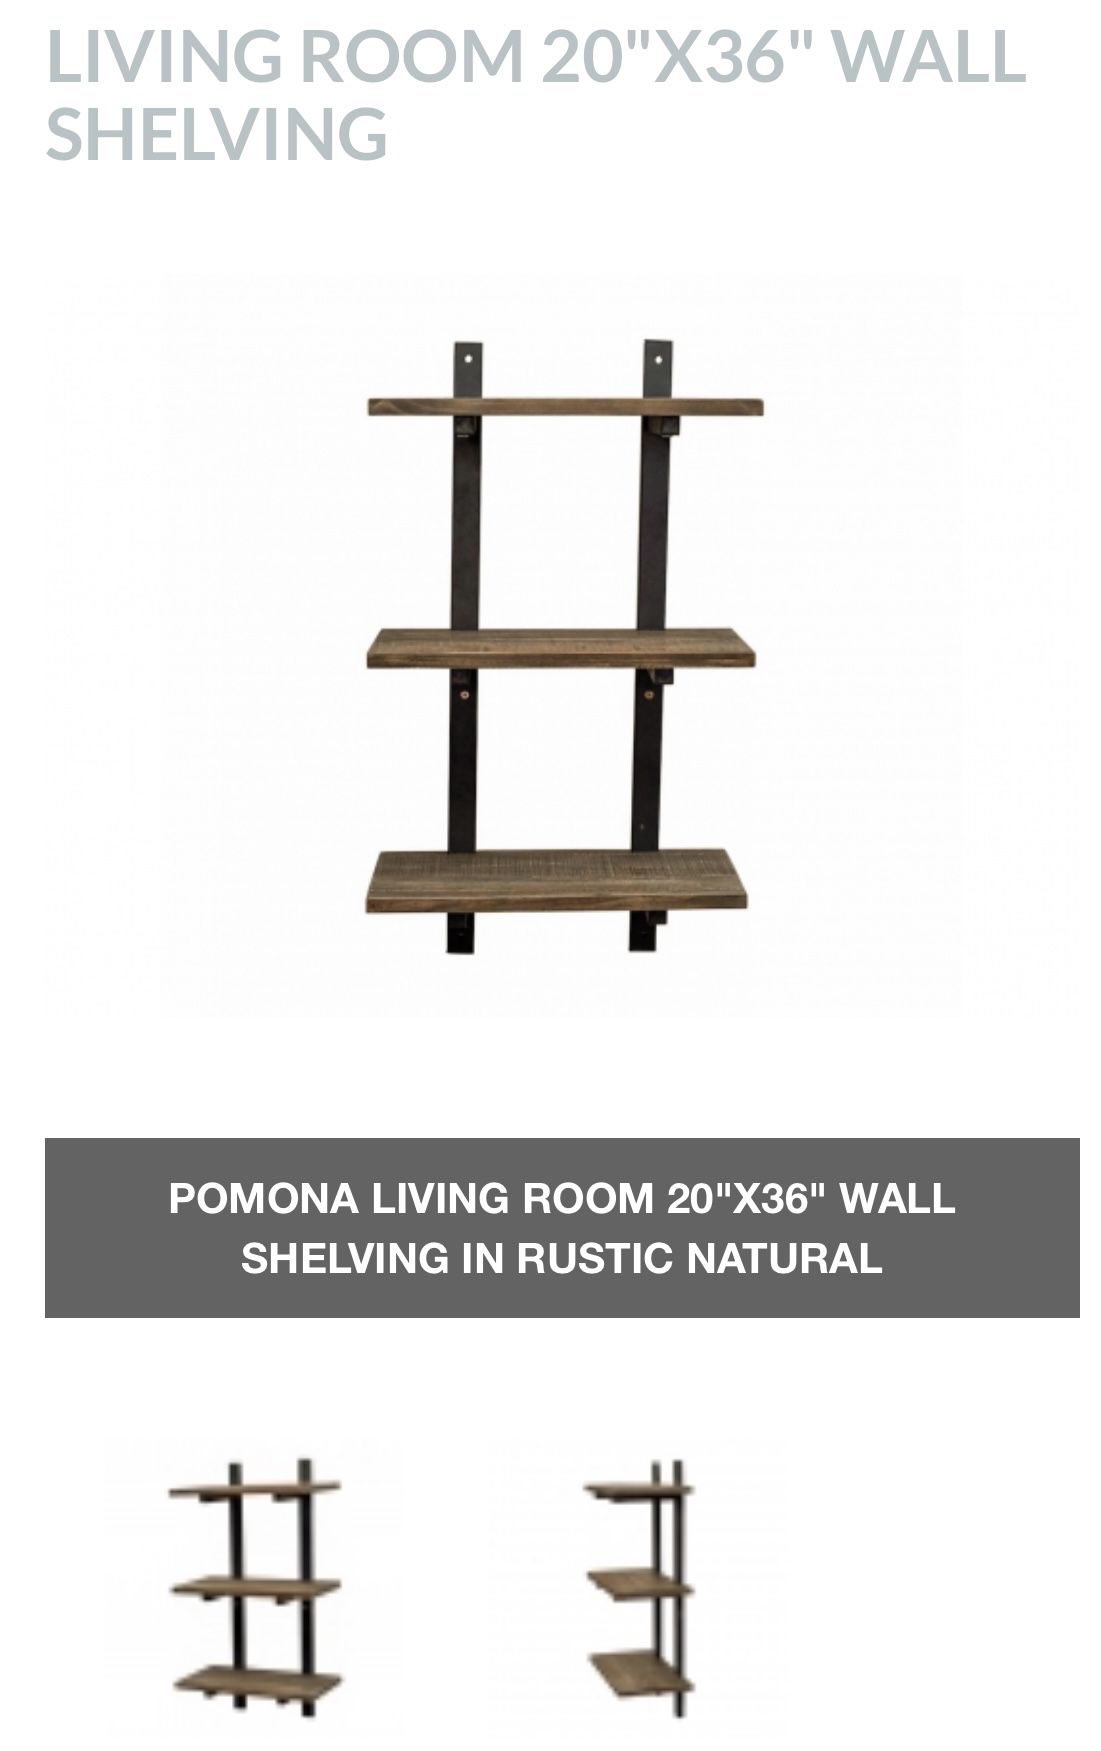 Pomona Collection 20”x36” Wall Shelving